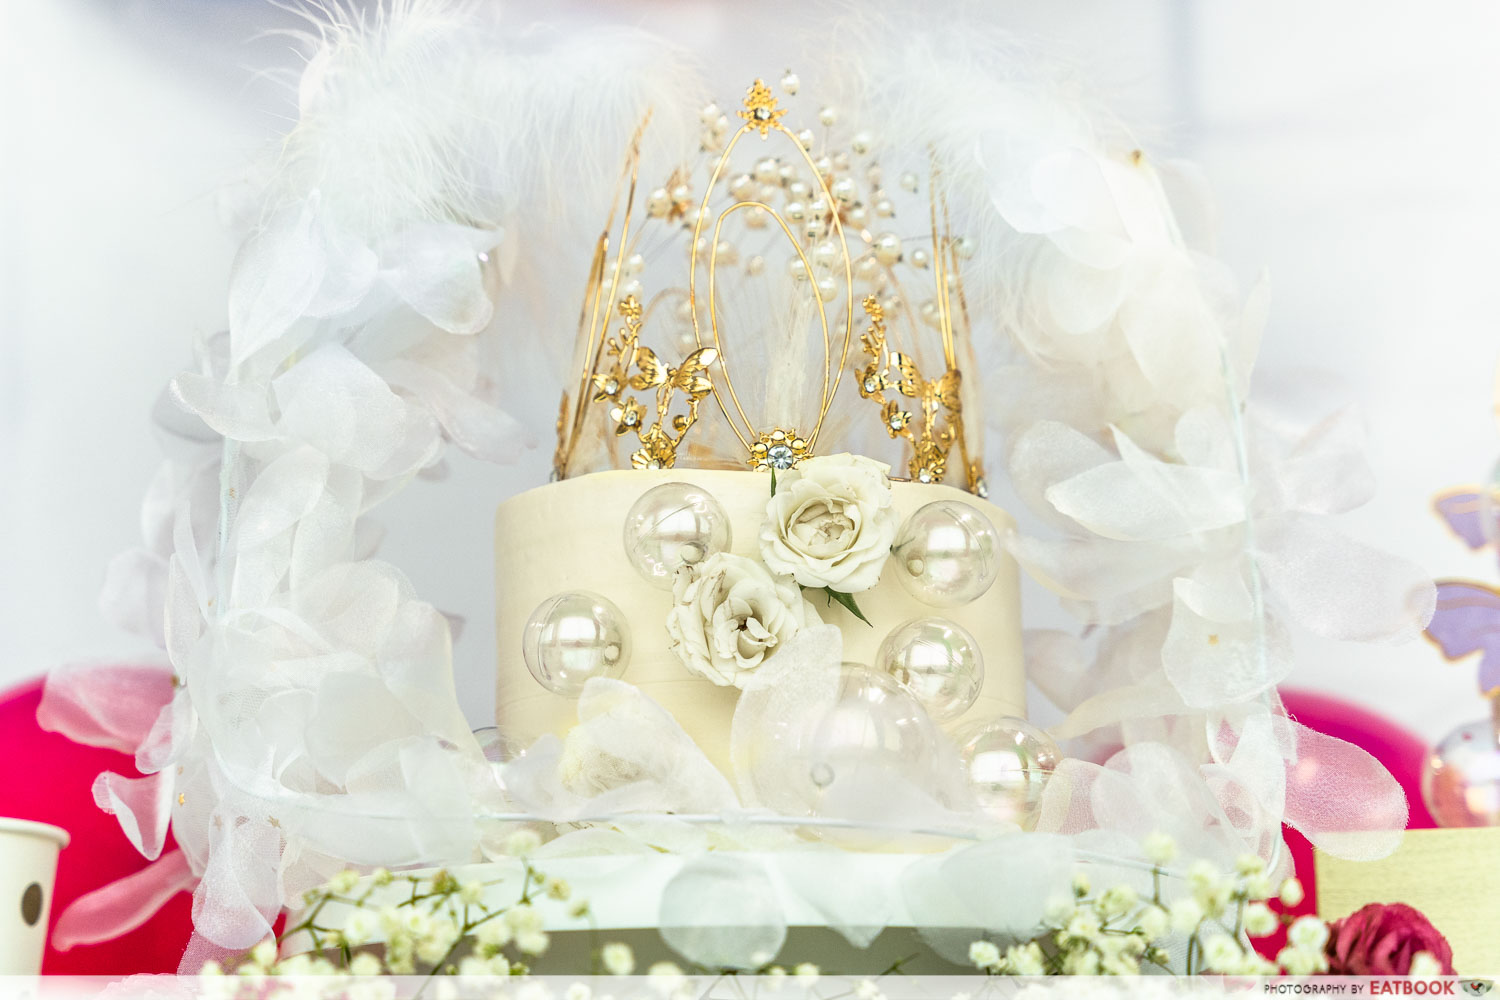 customised cakes - with tiara